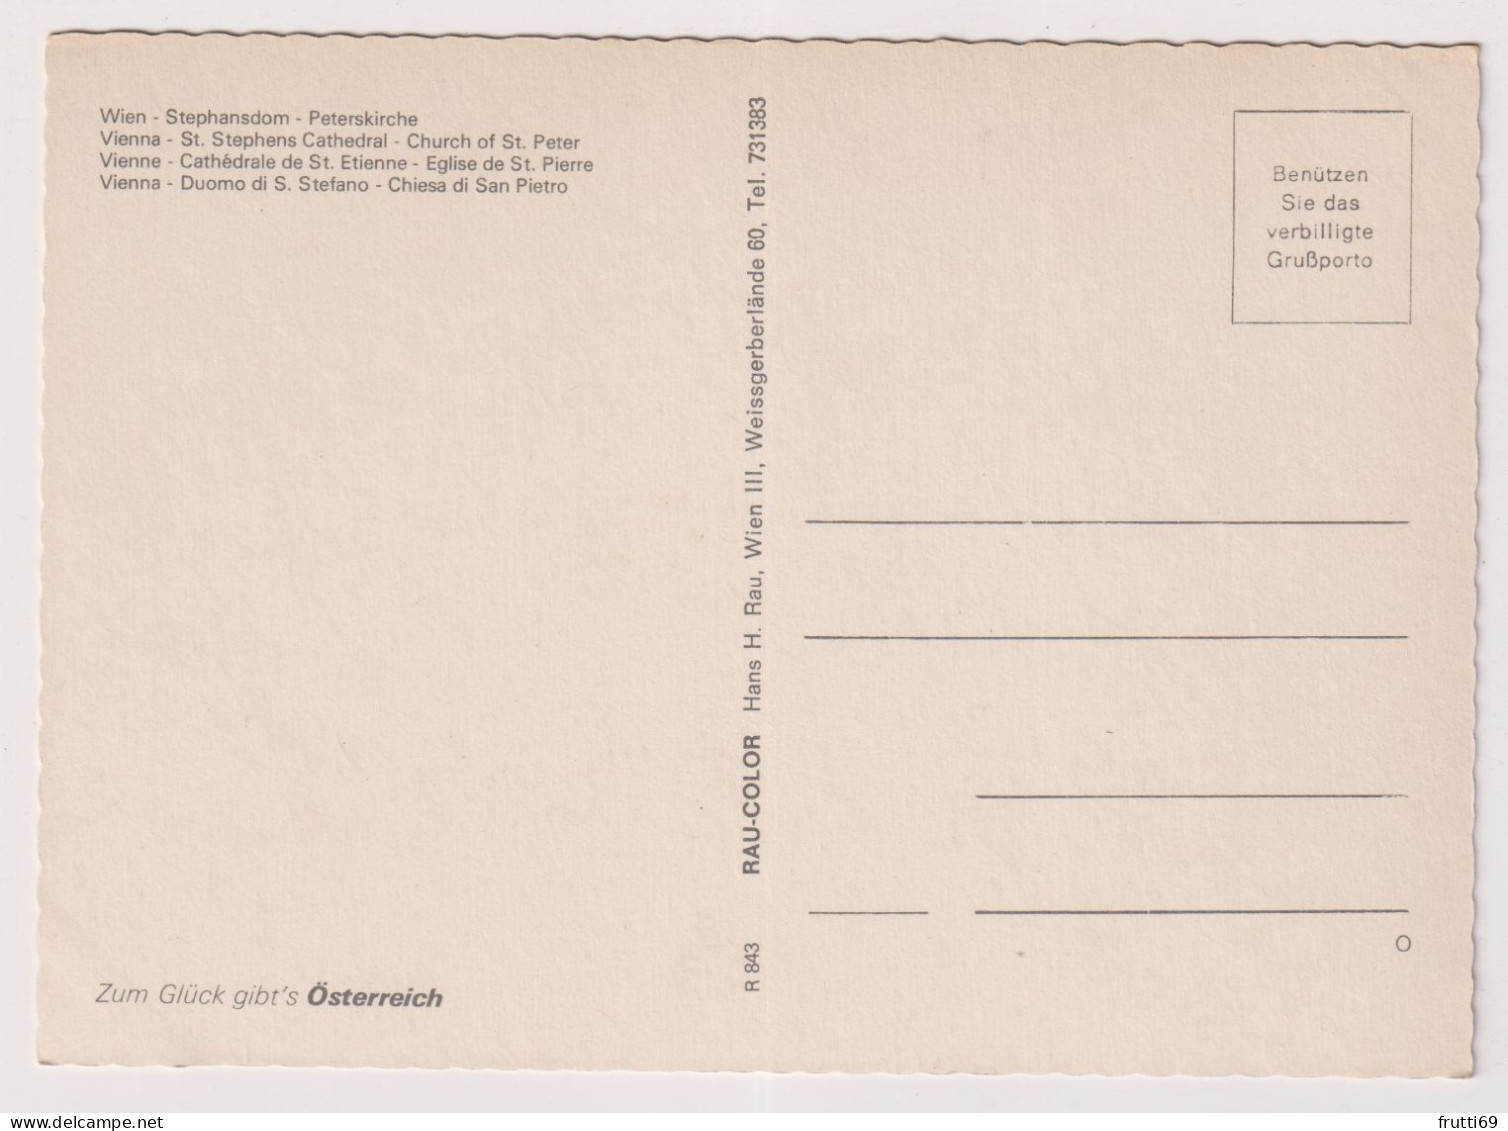 AK 198905 AUSTRIA - Wien - Stephansdom - Peterskirche - Églises